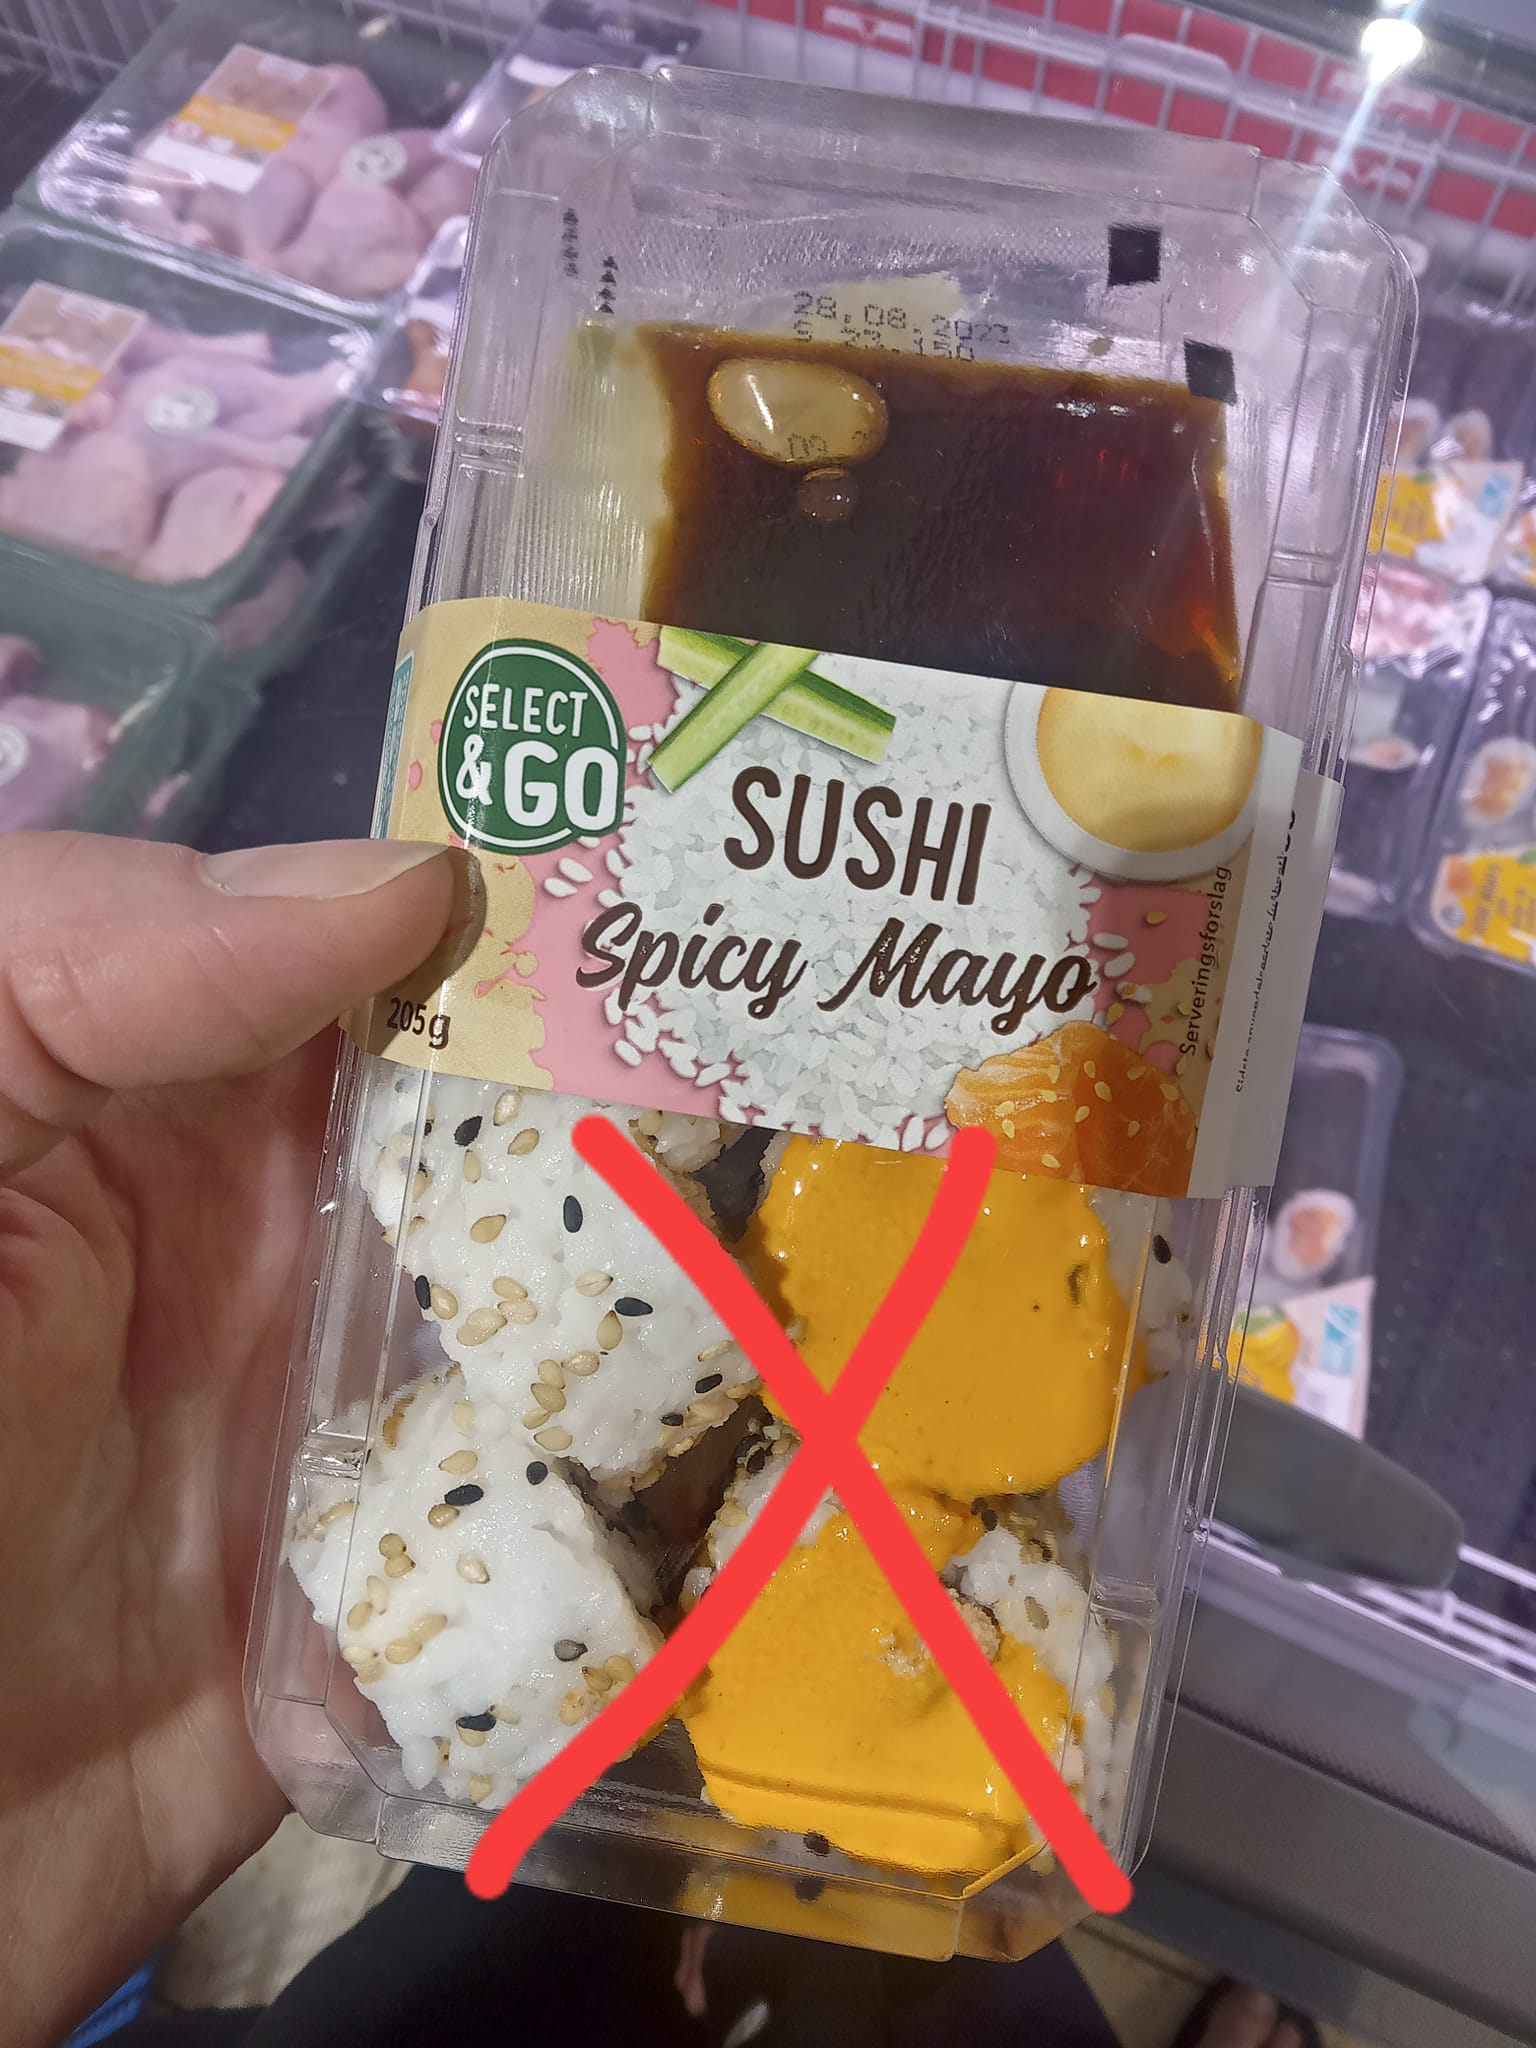 Sushi fra select and go indeholder Saccharin